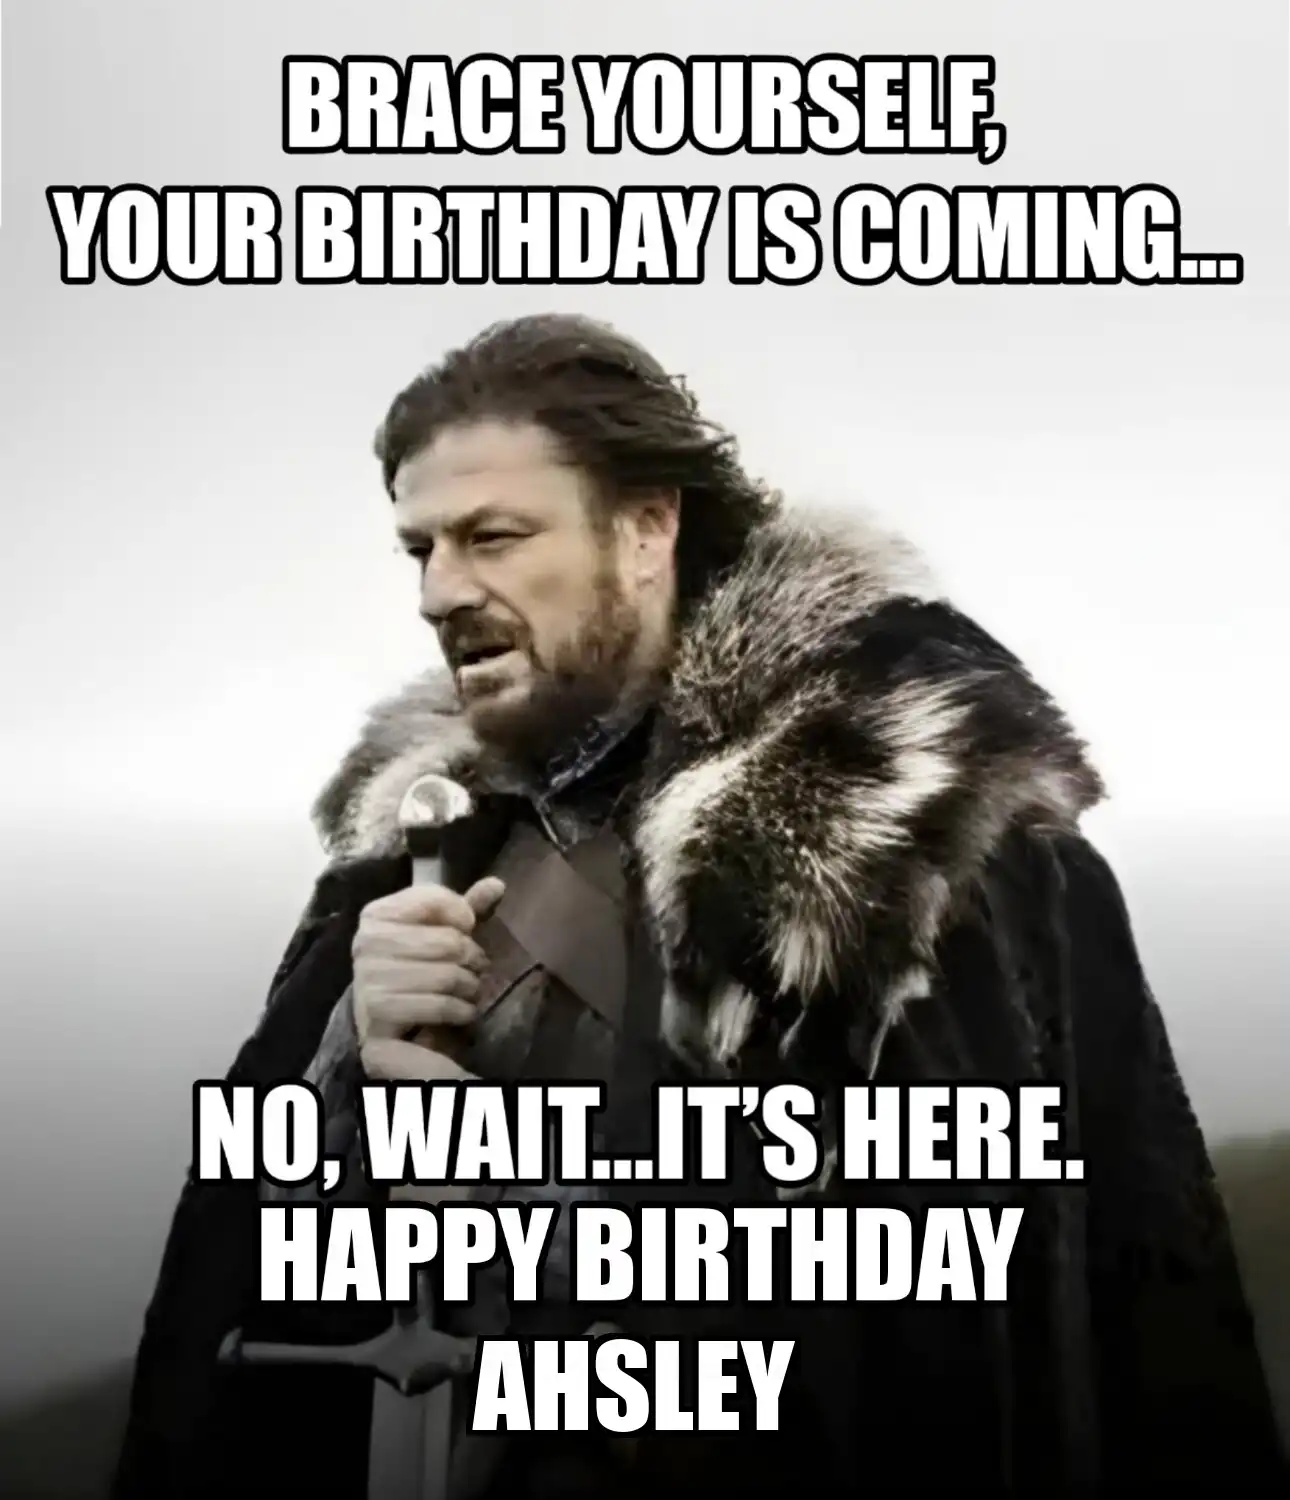 Happy Birthday Ahsley Brace Yourself Your Birthday Is Coming Meme